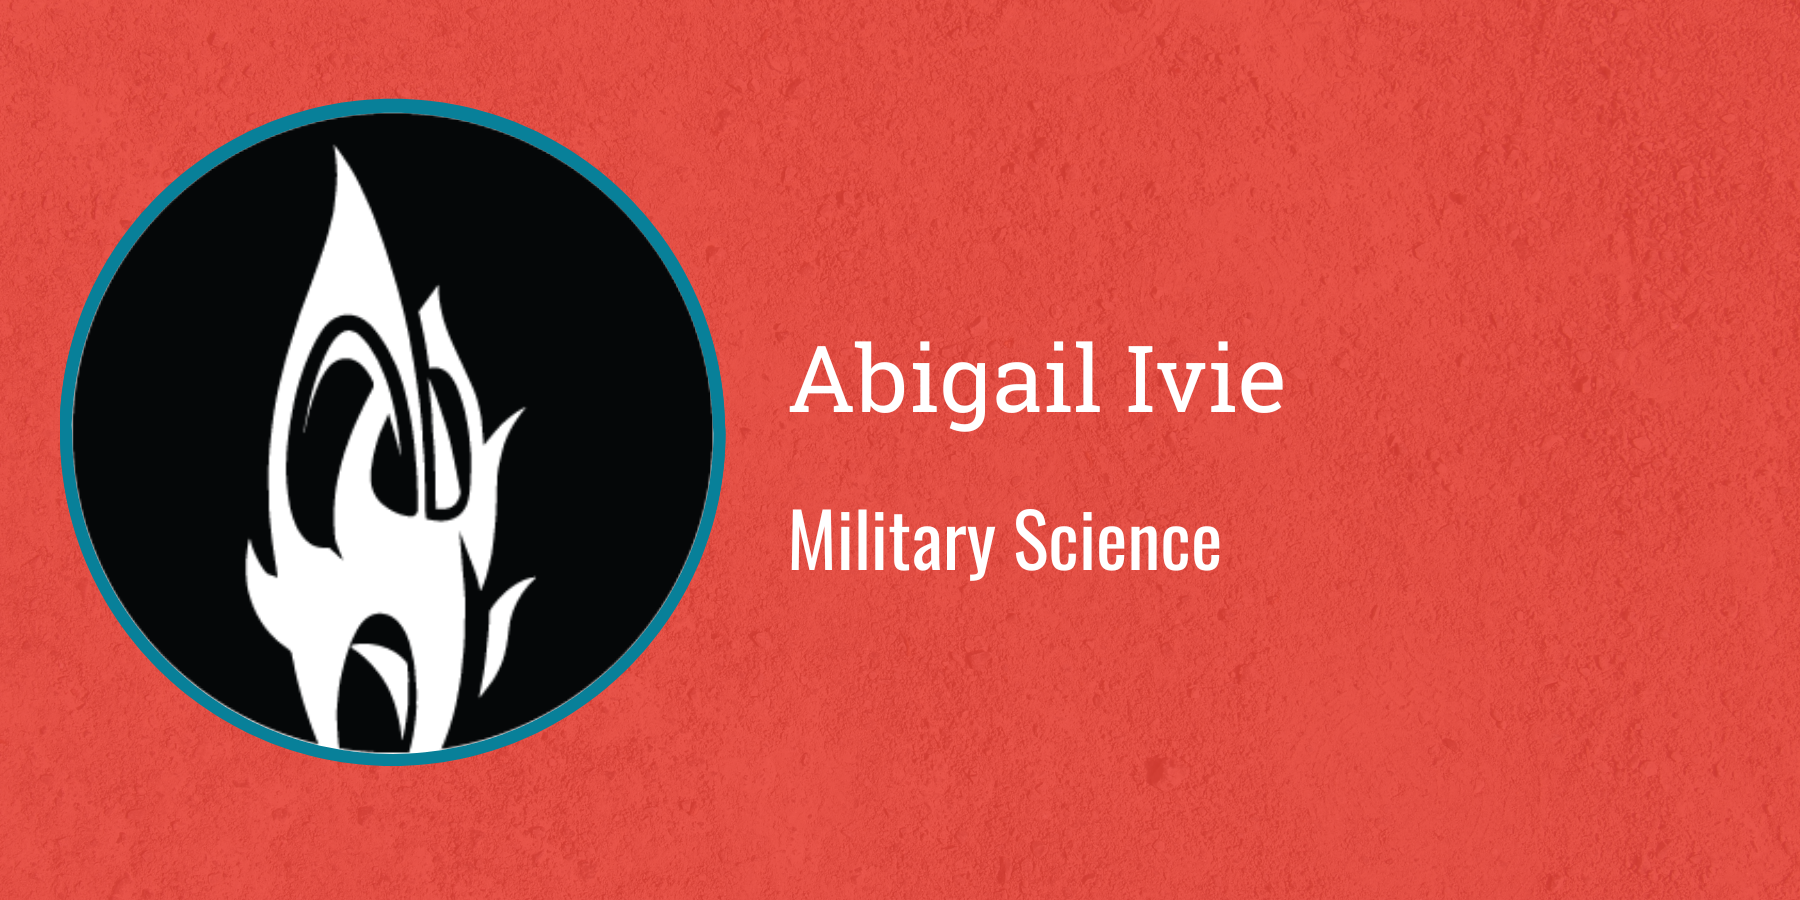 Abigail Ivie
Military Science 